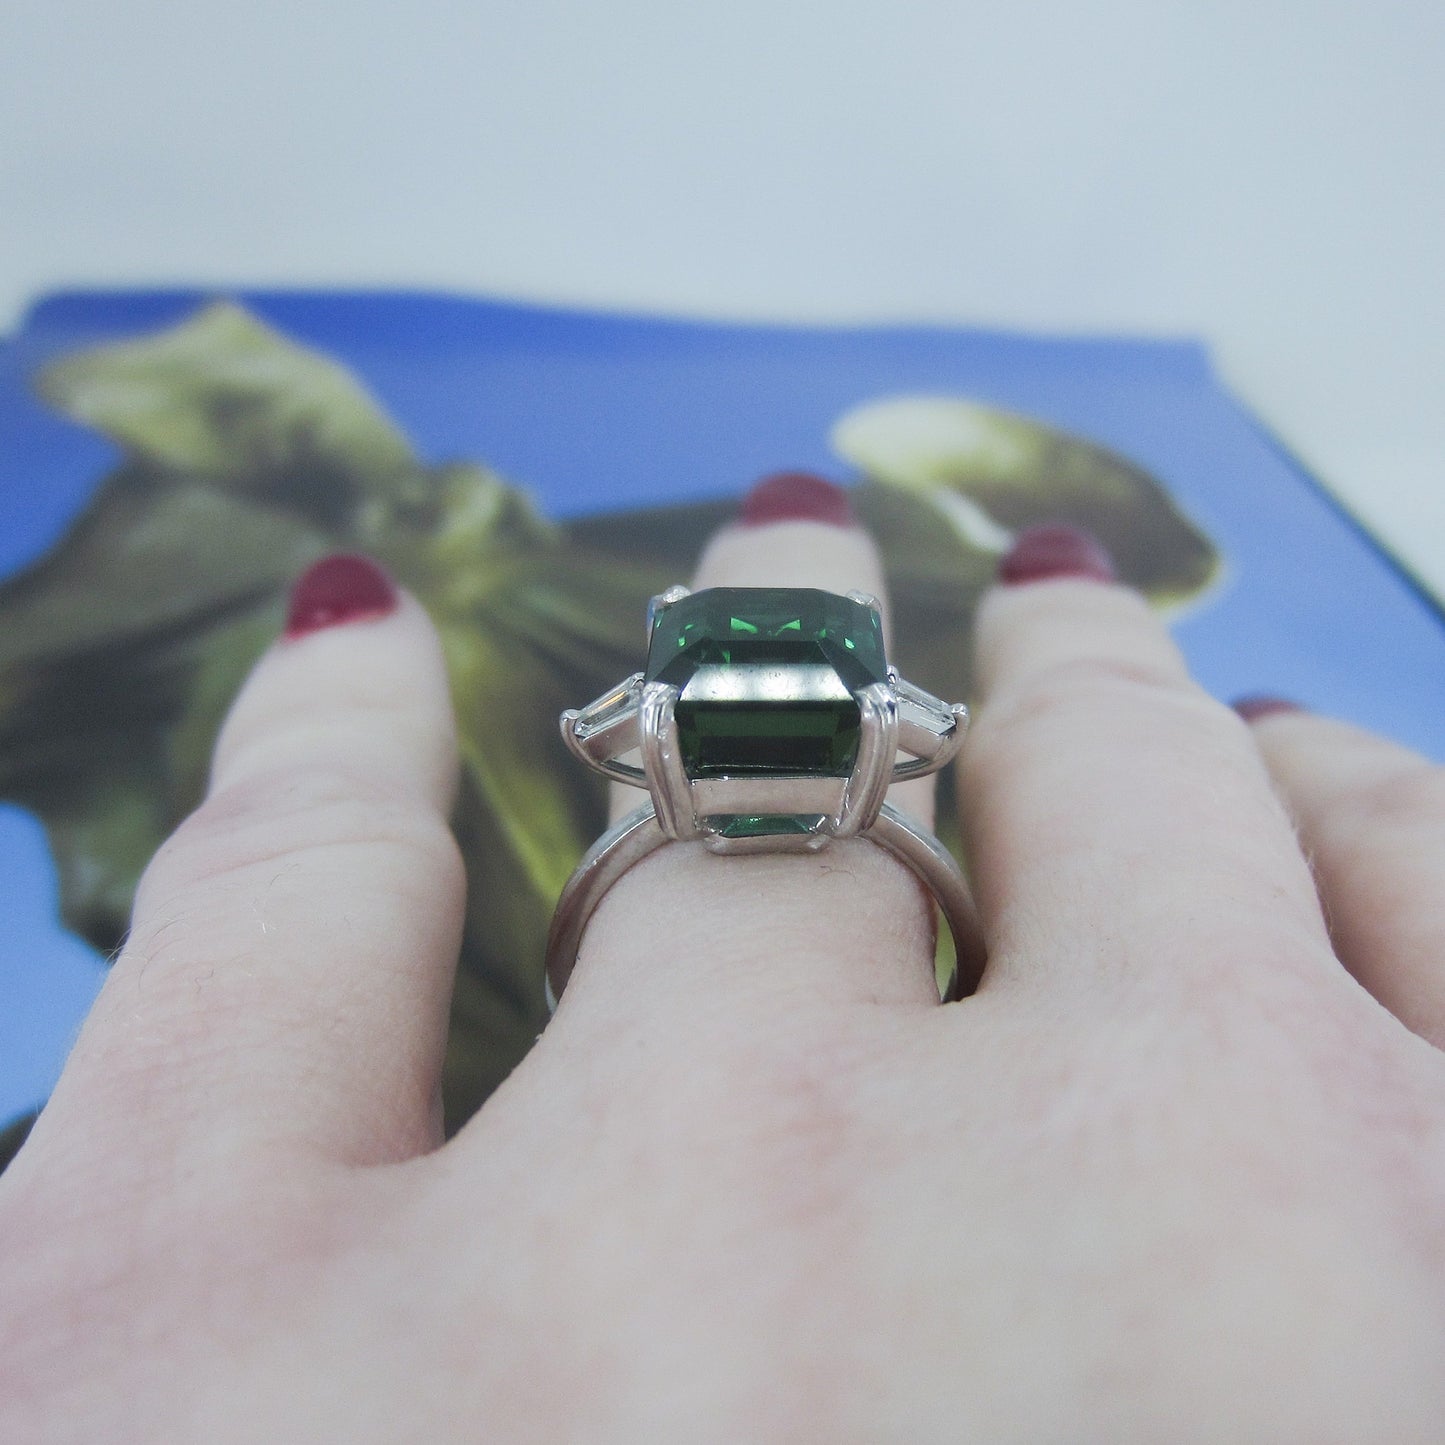 SOLD--Vintage Green Tourmaline and Diamond Ring 18k, H. Stern c. 1990